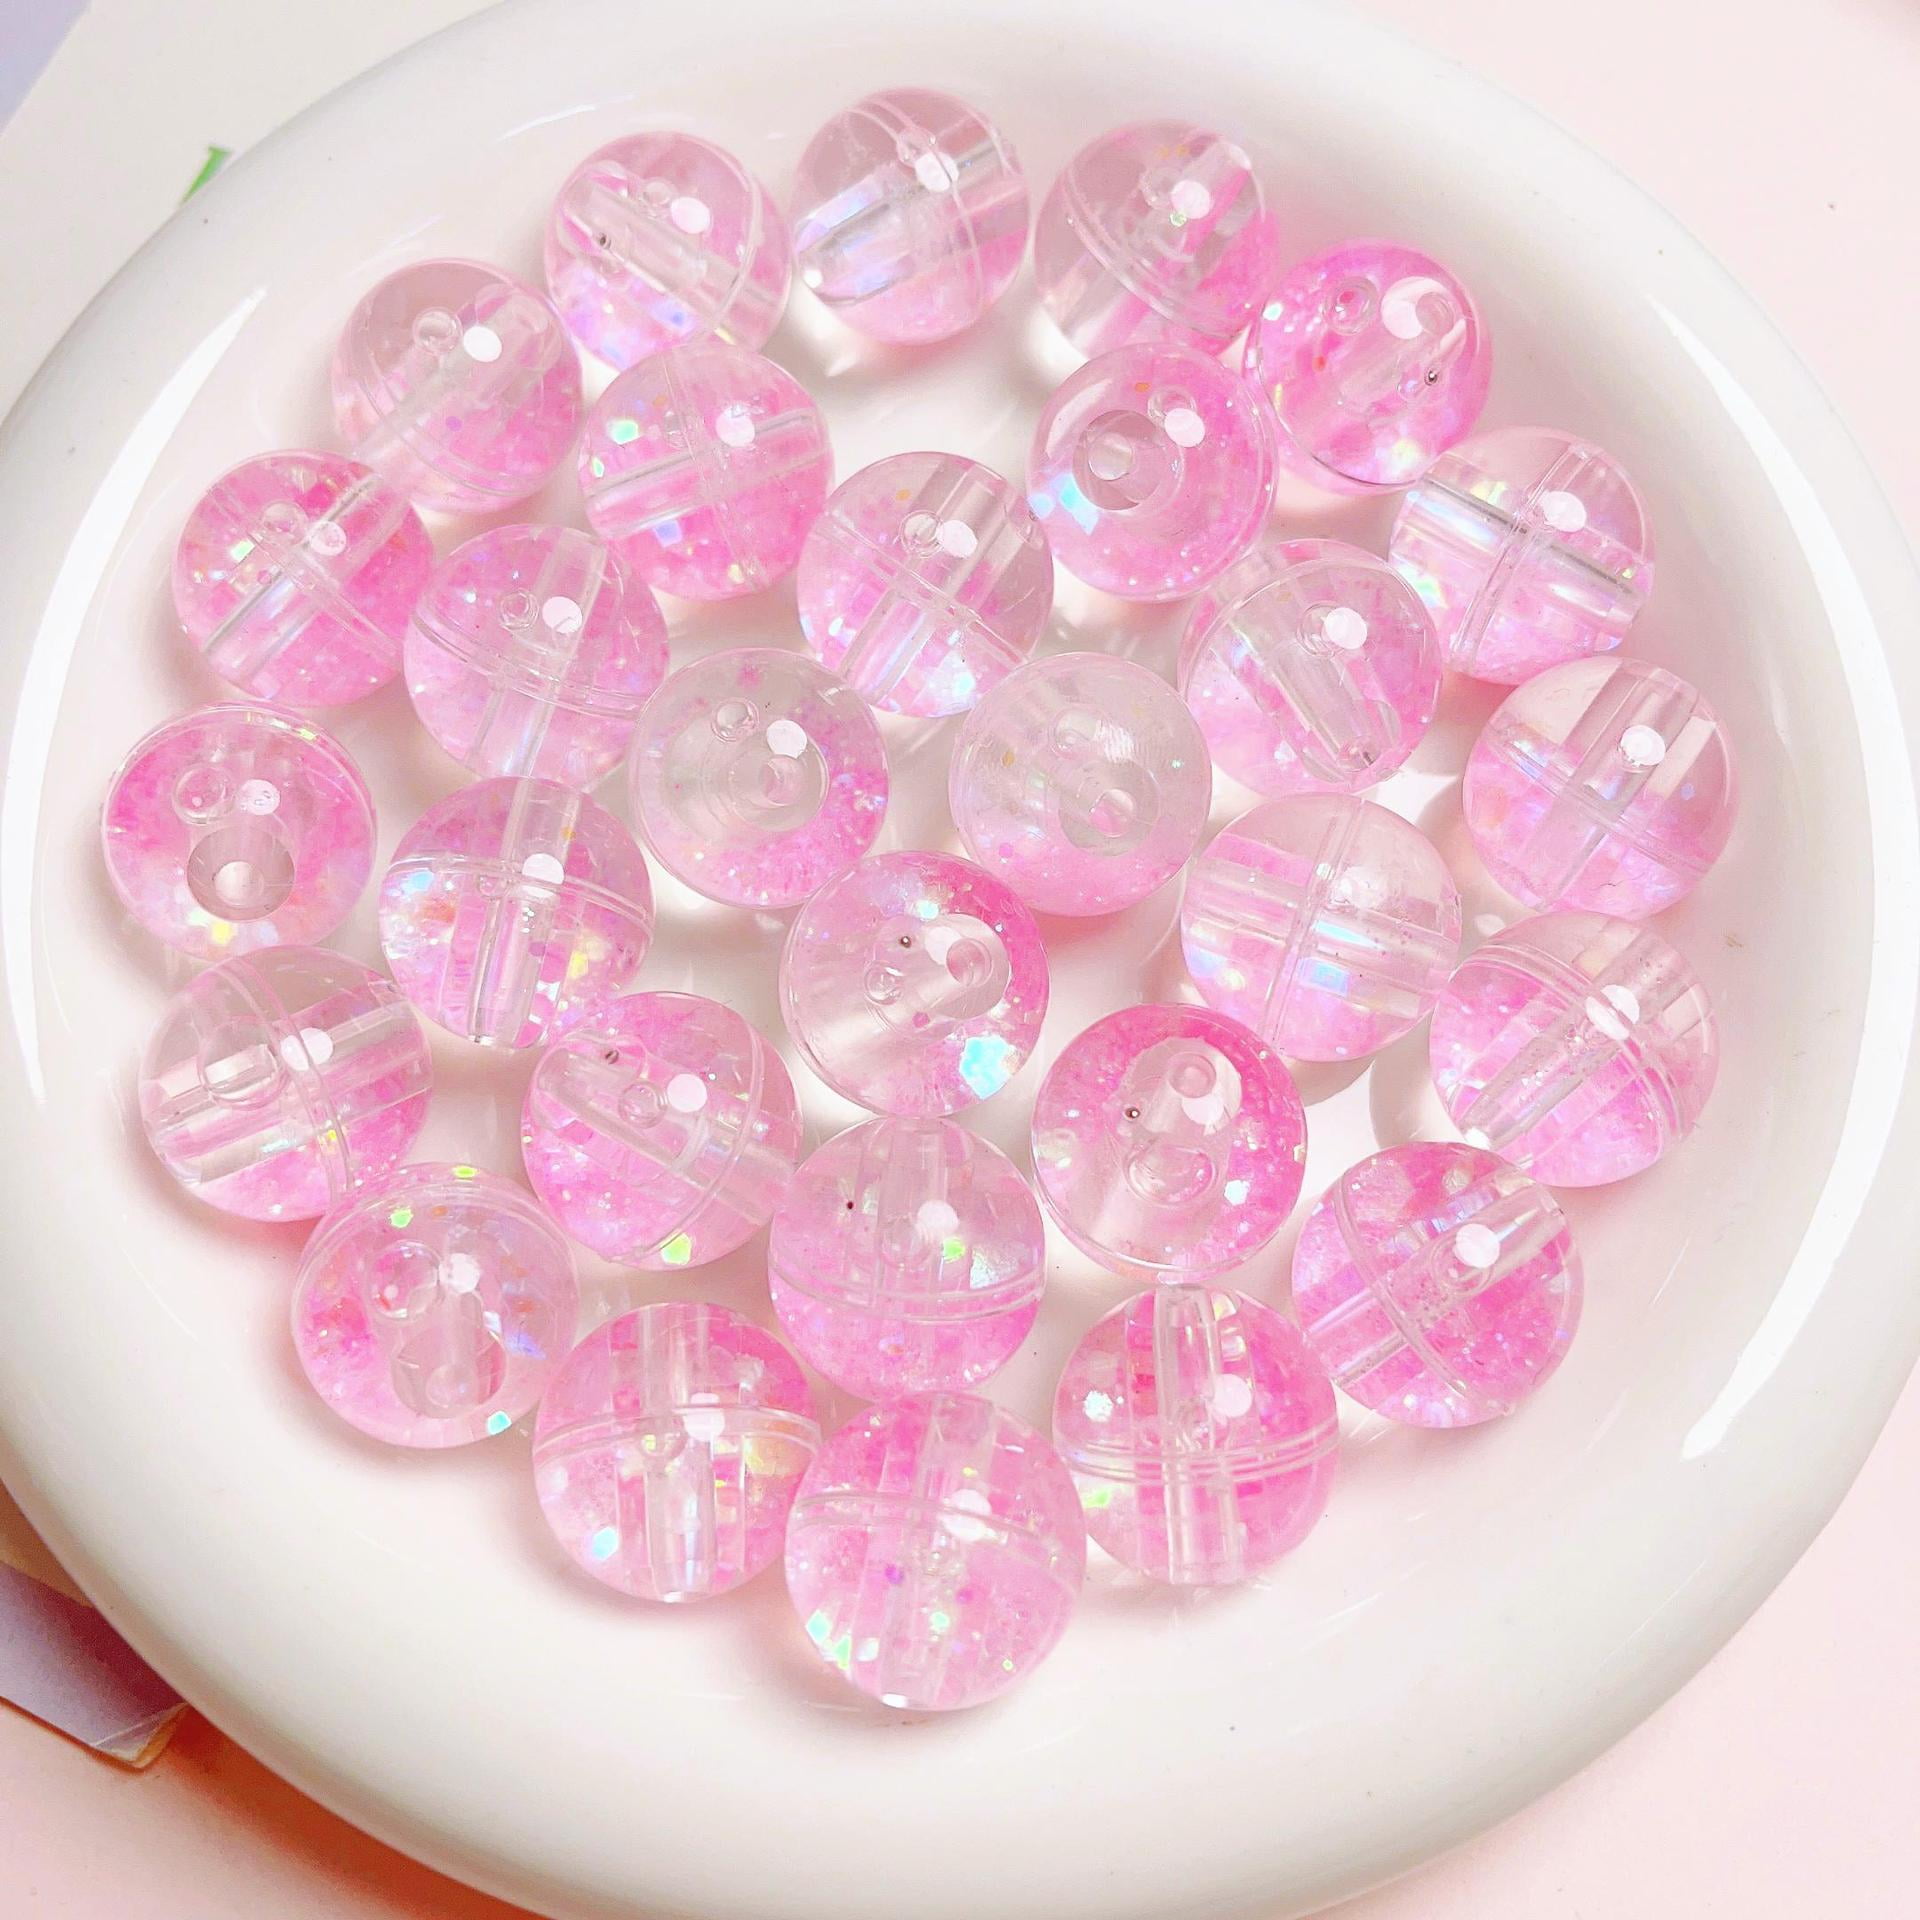 Feildoo 200pcs Shiny Lifelike Acrylic Candy Beads for Jewelry